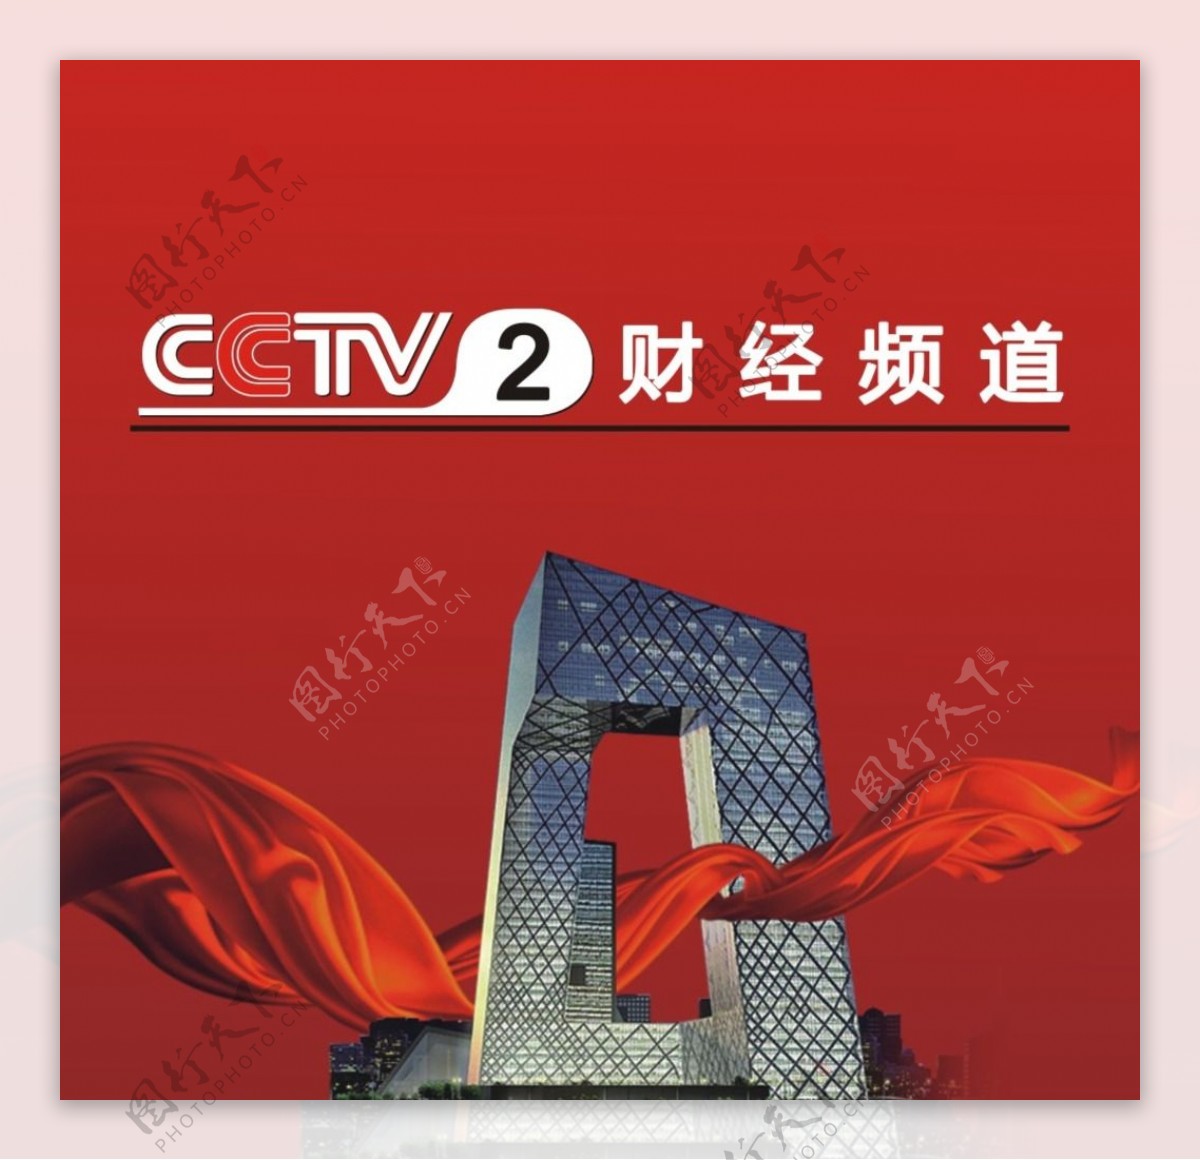 cctv2财经频道图片